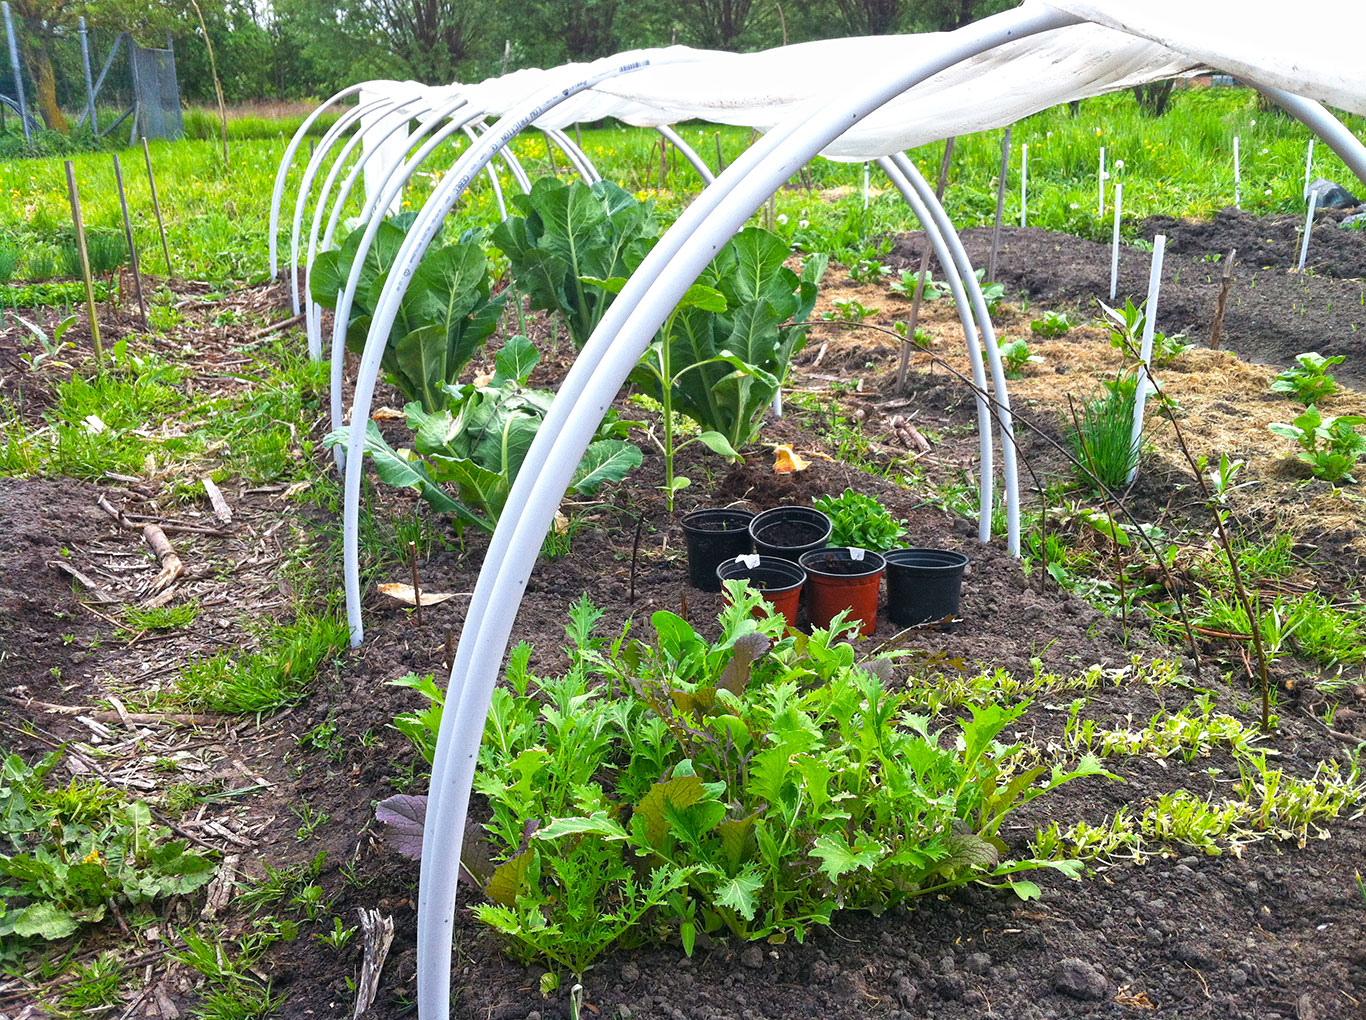 plastic-tunnel-serre-interplanting-sla-lenteui-broccoli-radijzen-verlenging-groeiseizoen2